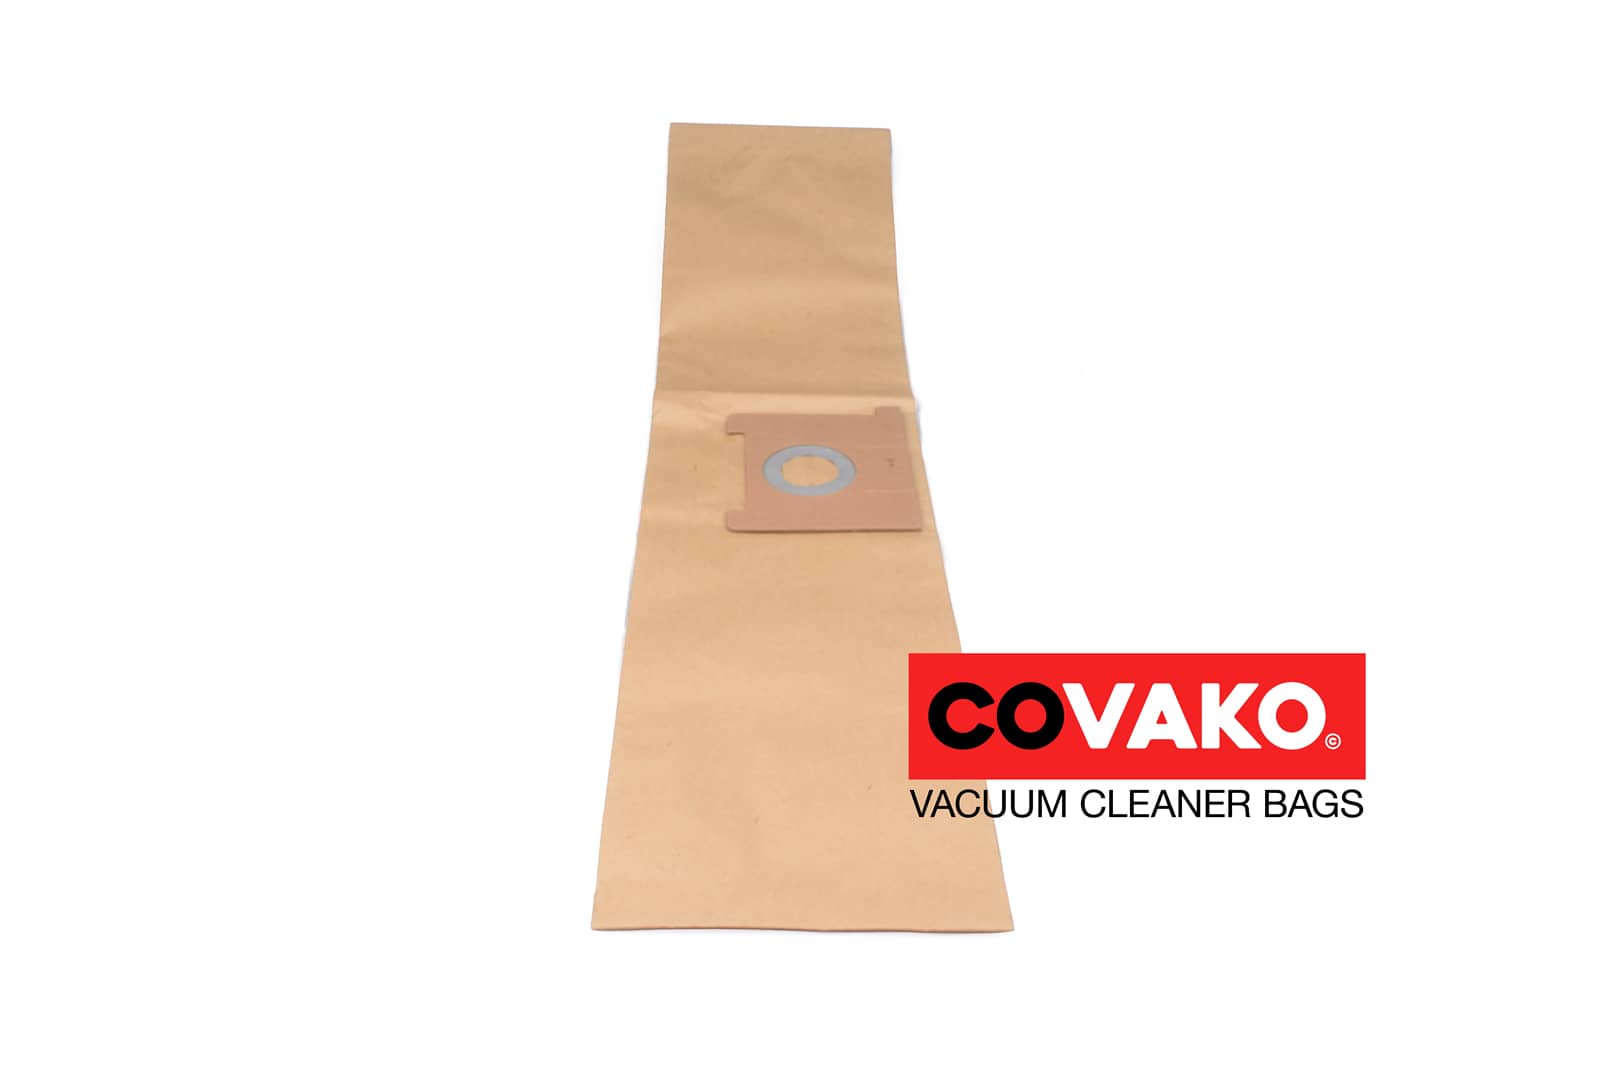 Clean a la Card 9 B / Paper - Clean a la Card vacuum cleaner bags